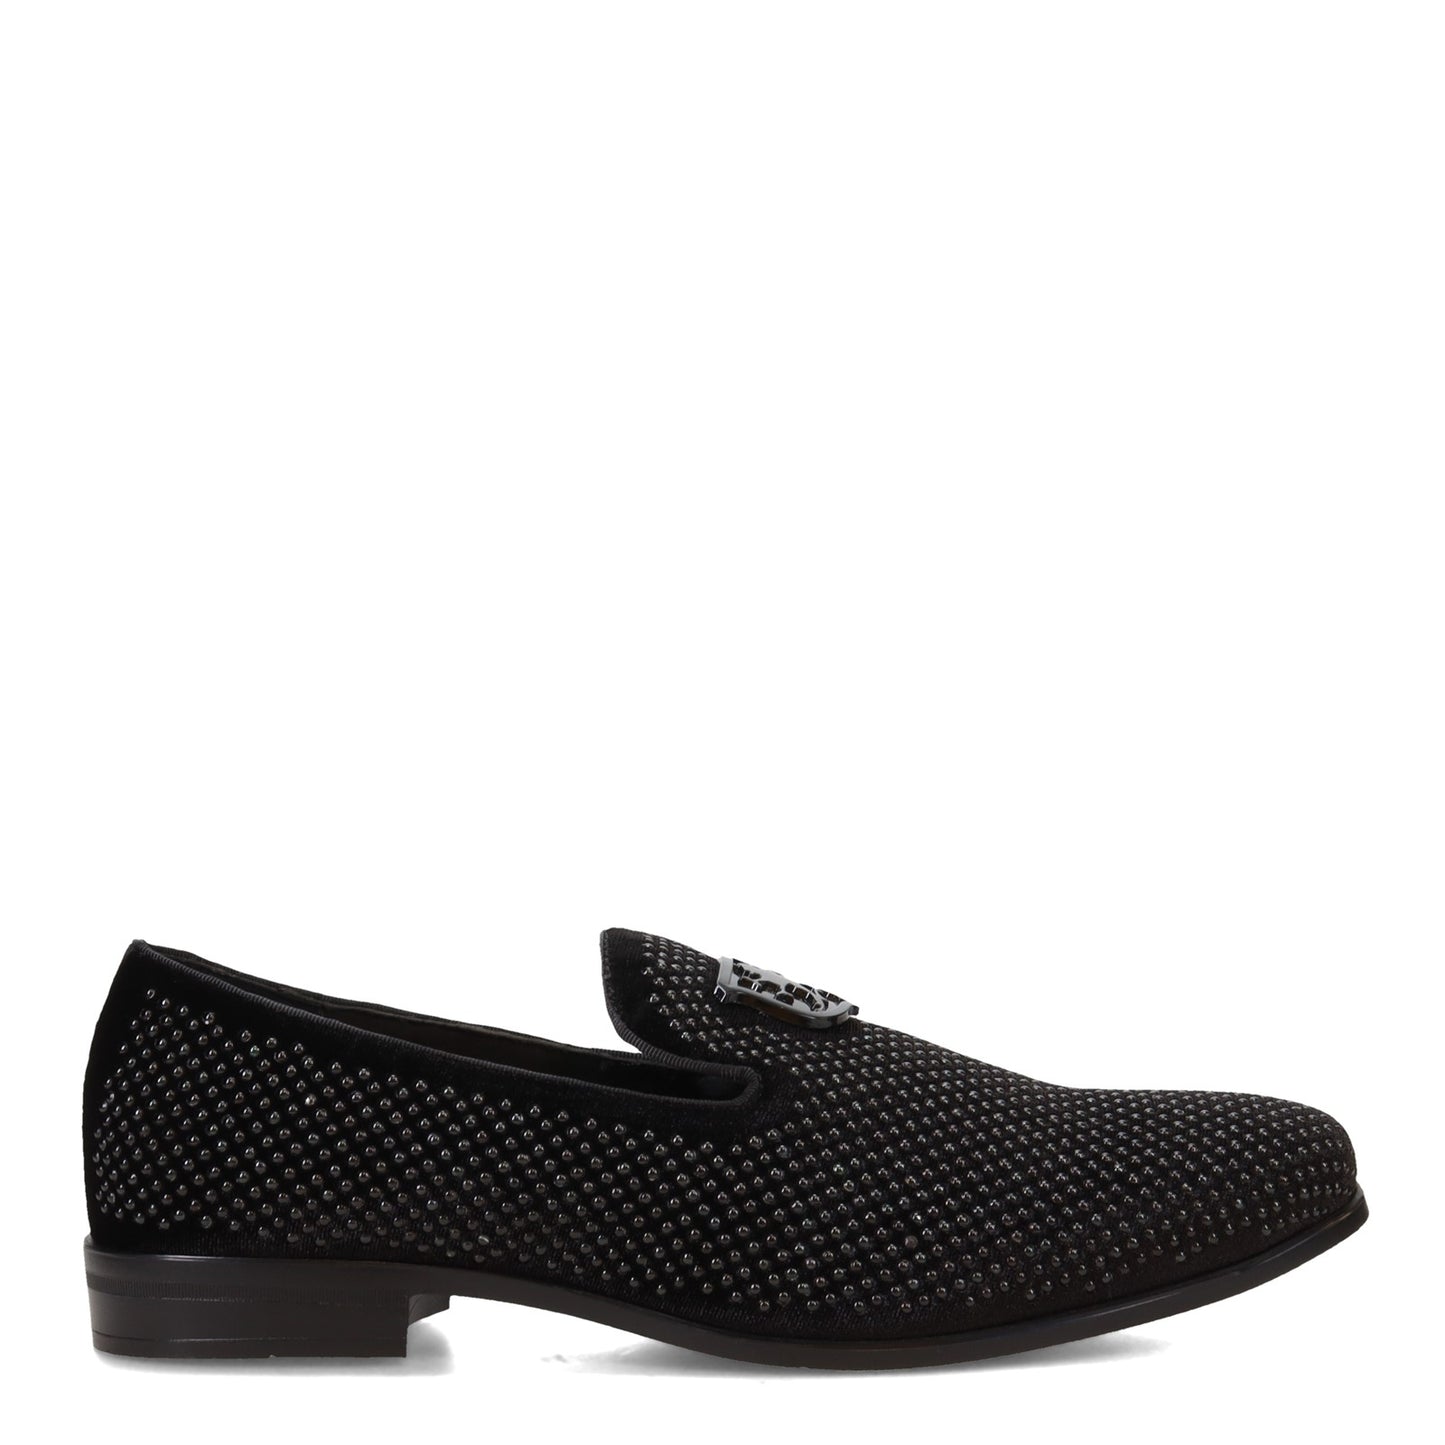 Peltz Shoes  Men's Stacy Adams Swagger Loafer Black 25228-001